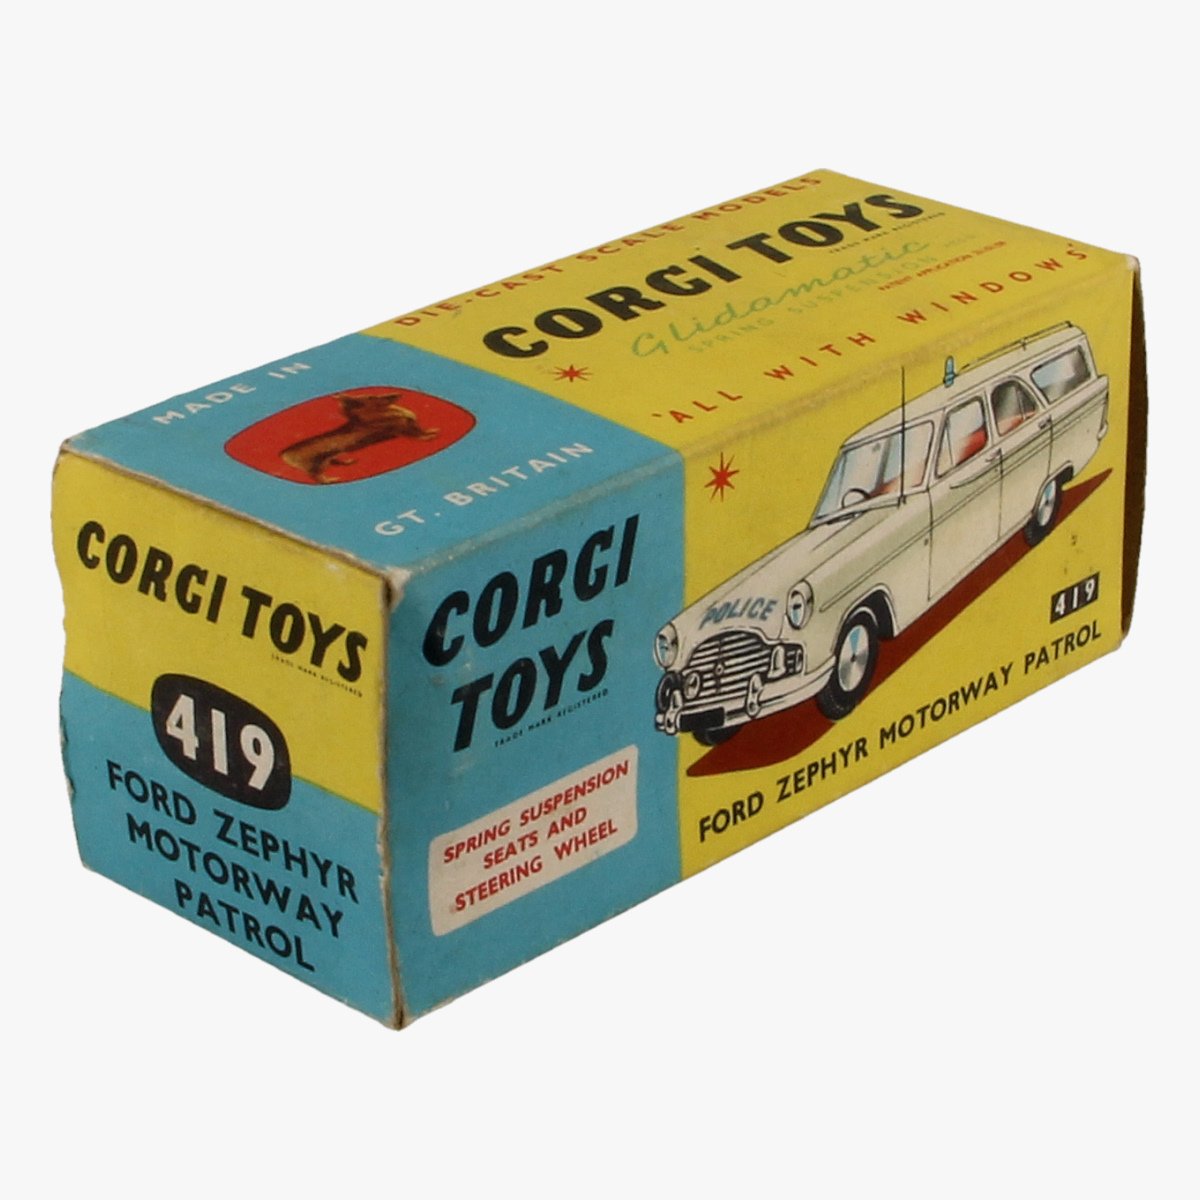 Afbeeldingen van Corgi Toys. Ford Zephyr Motorway Patrol 419